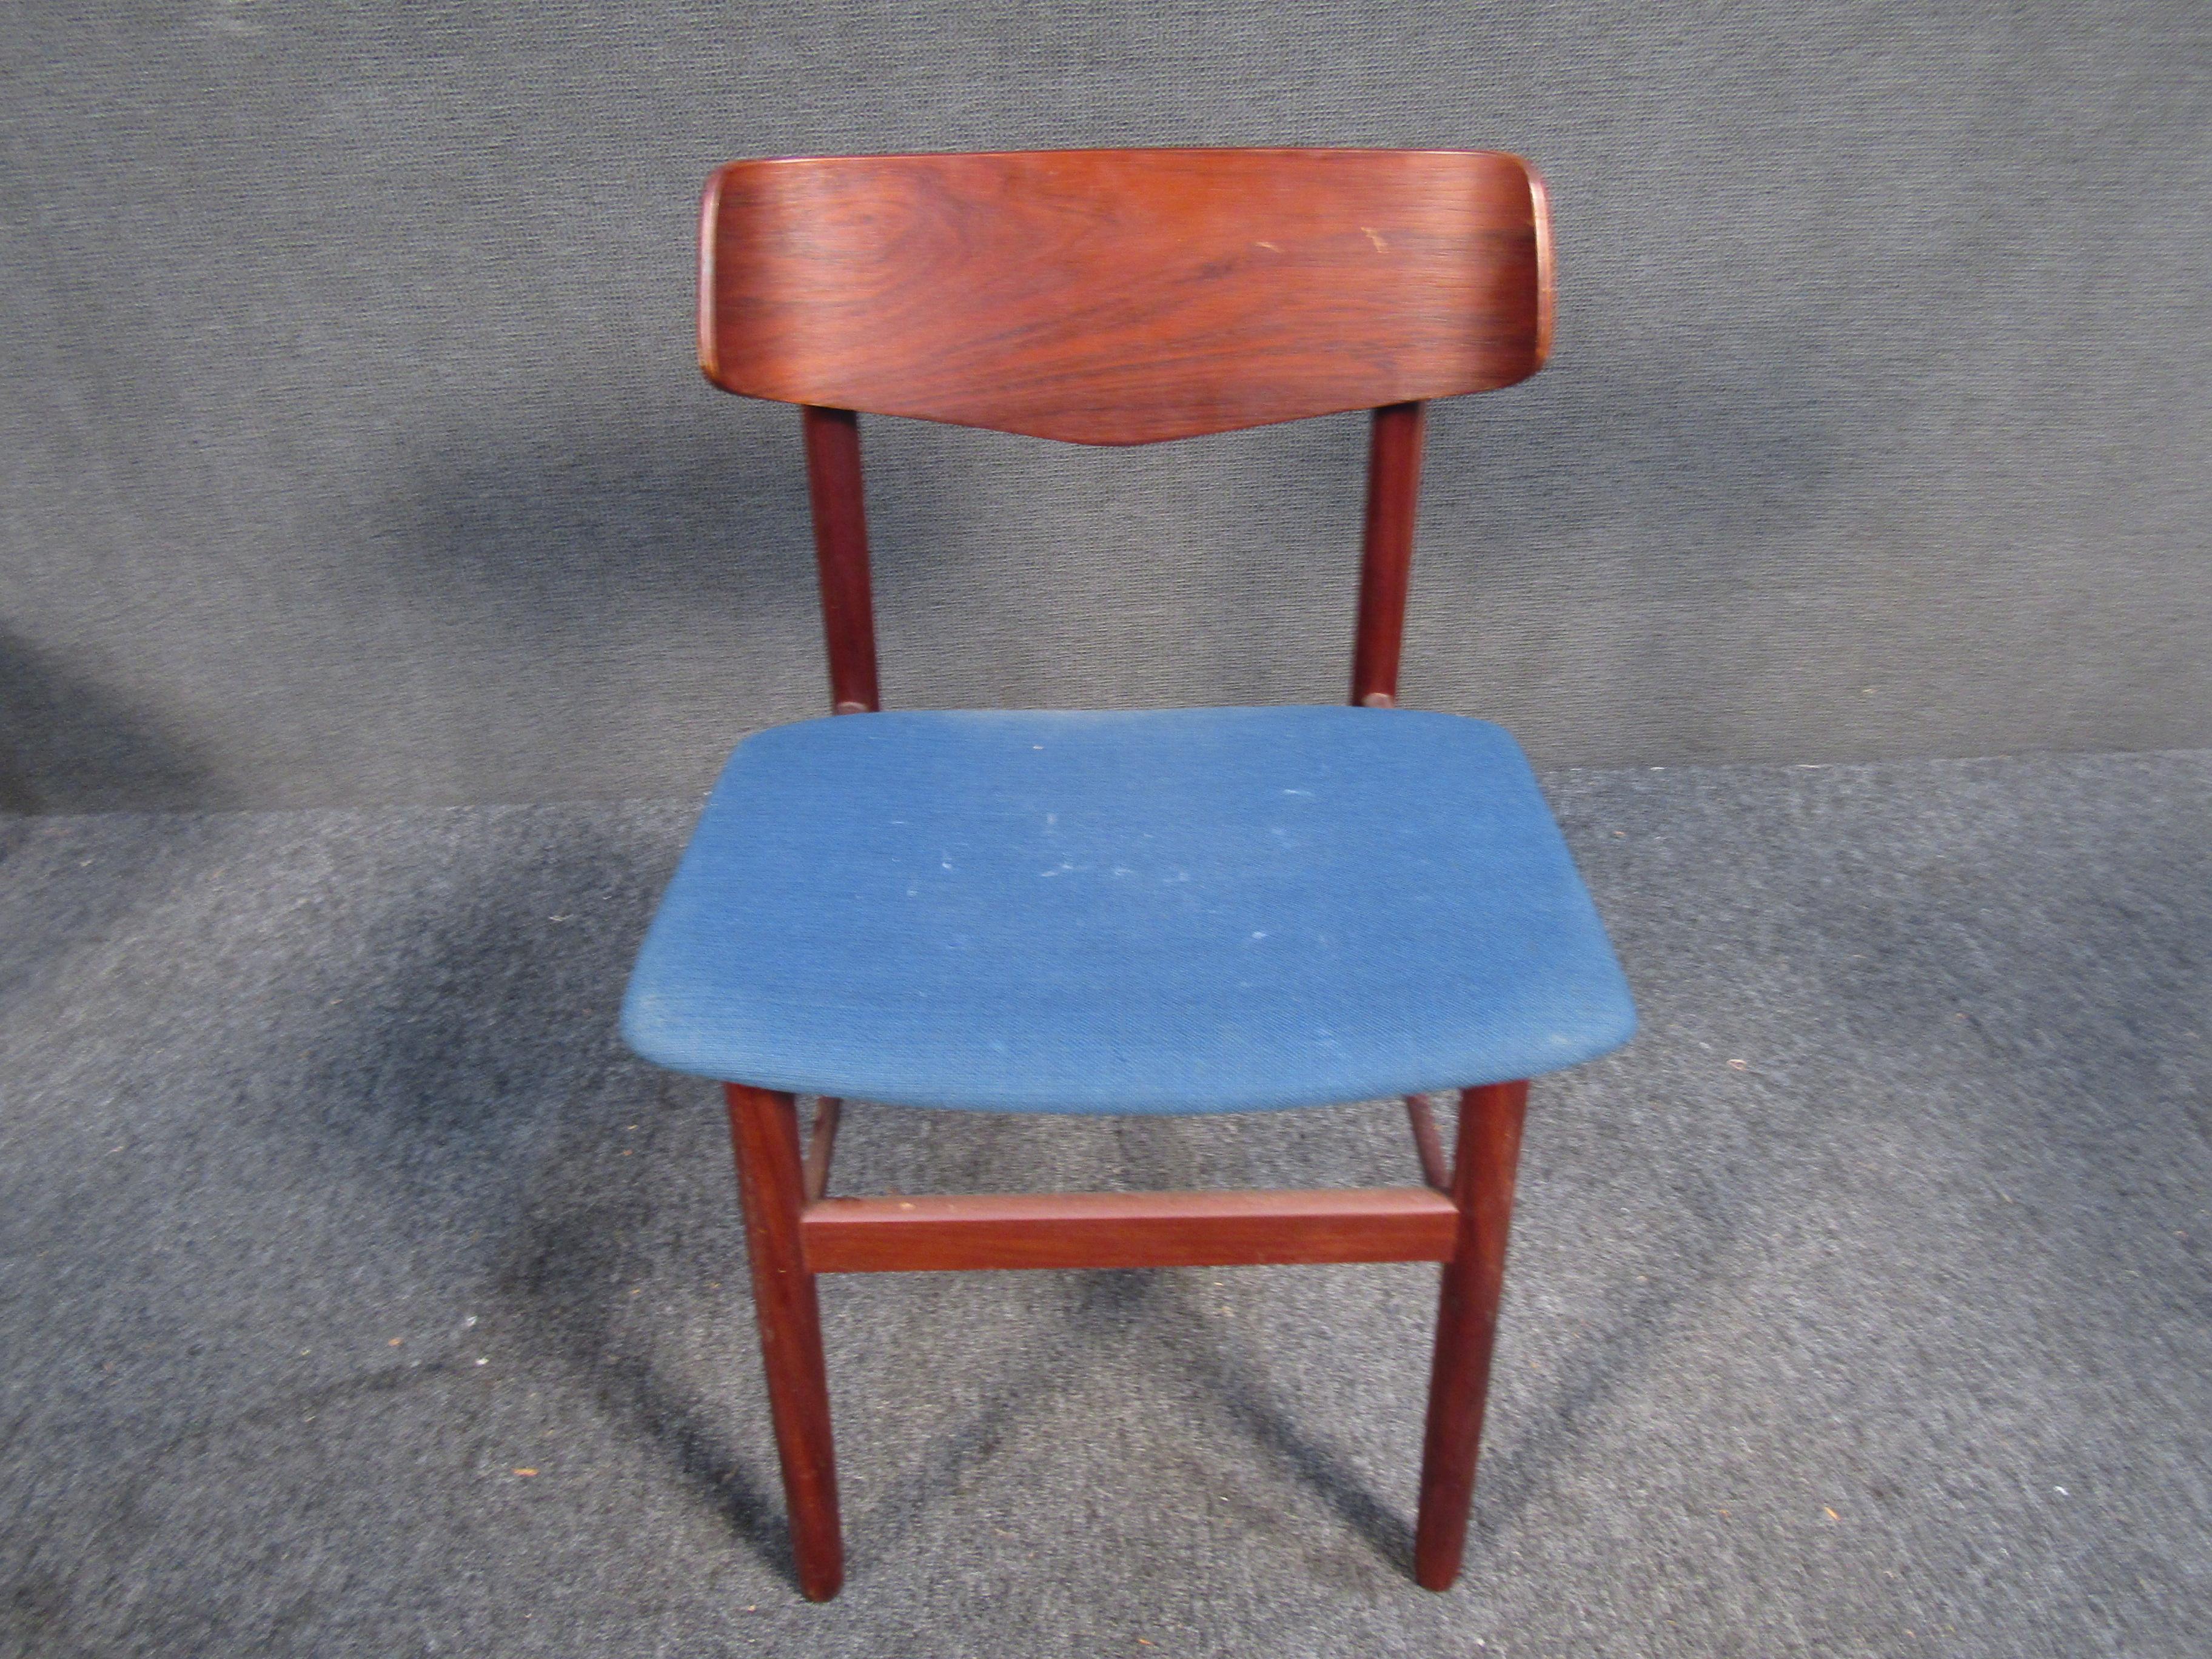 vintage danish modern dining chairs